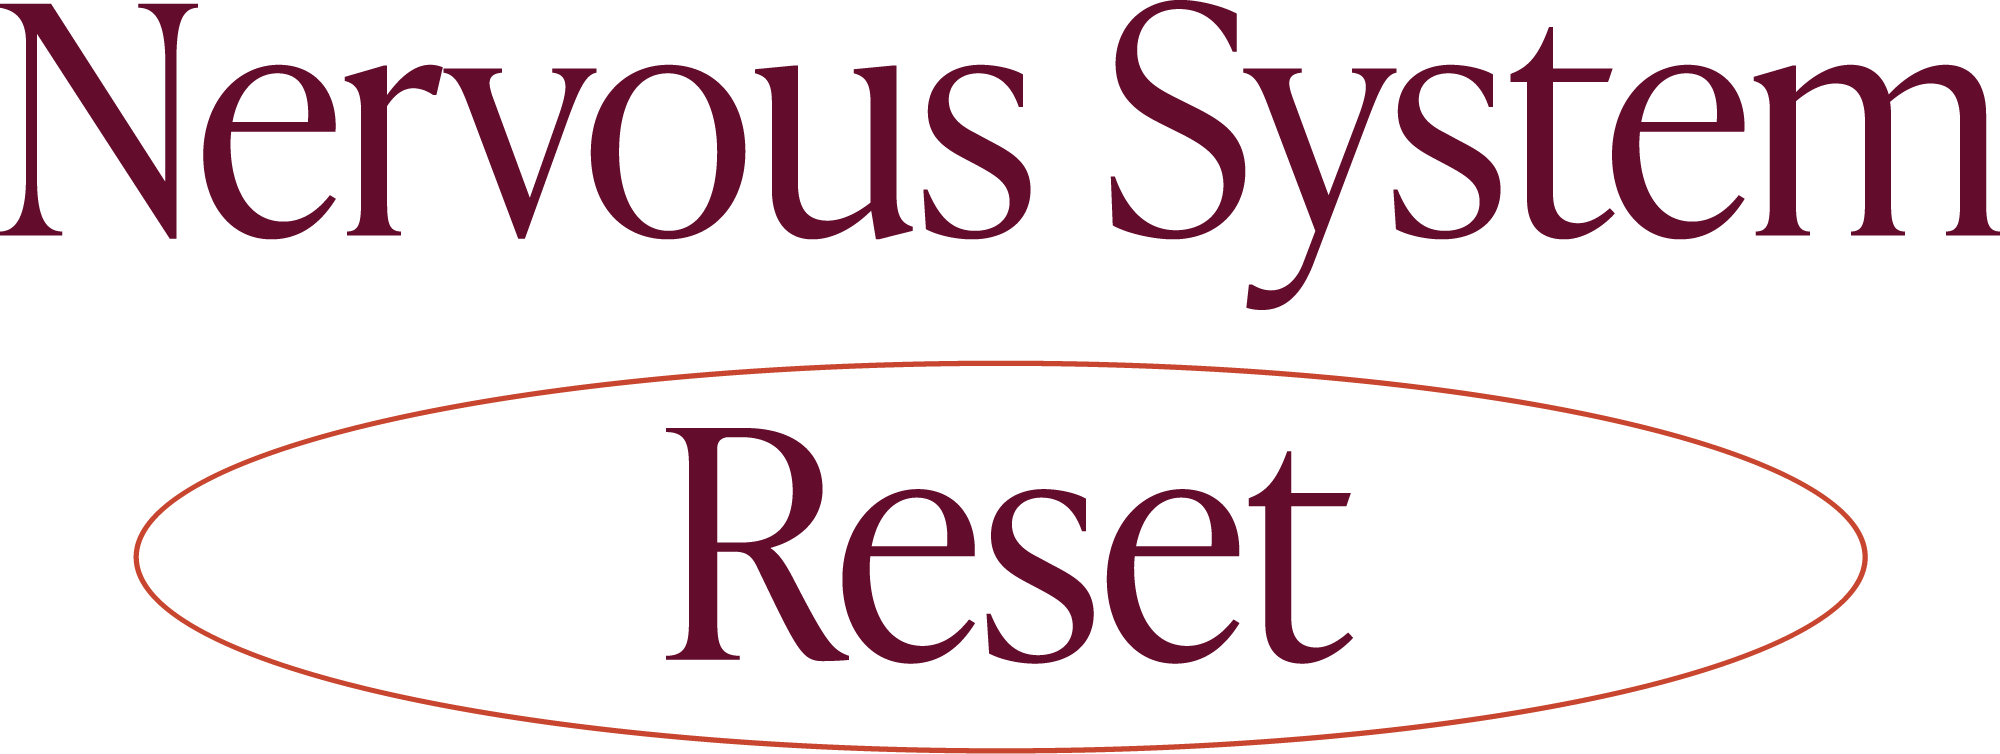 Nervous System Reset